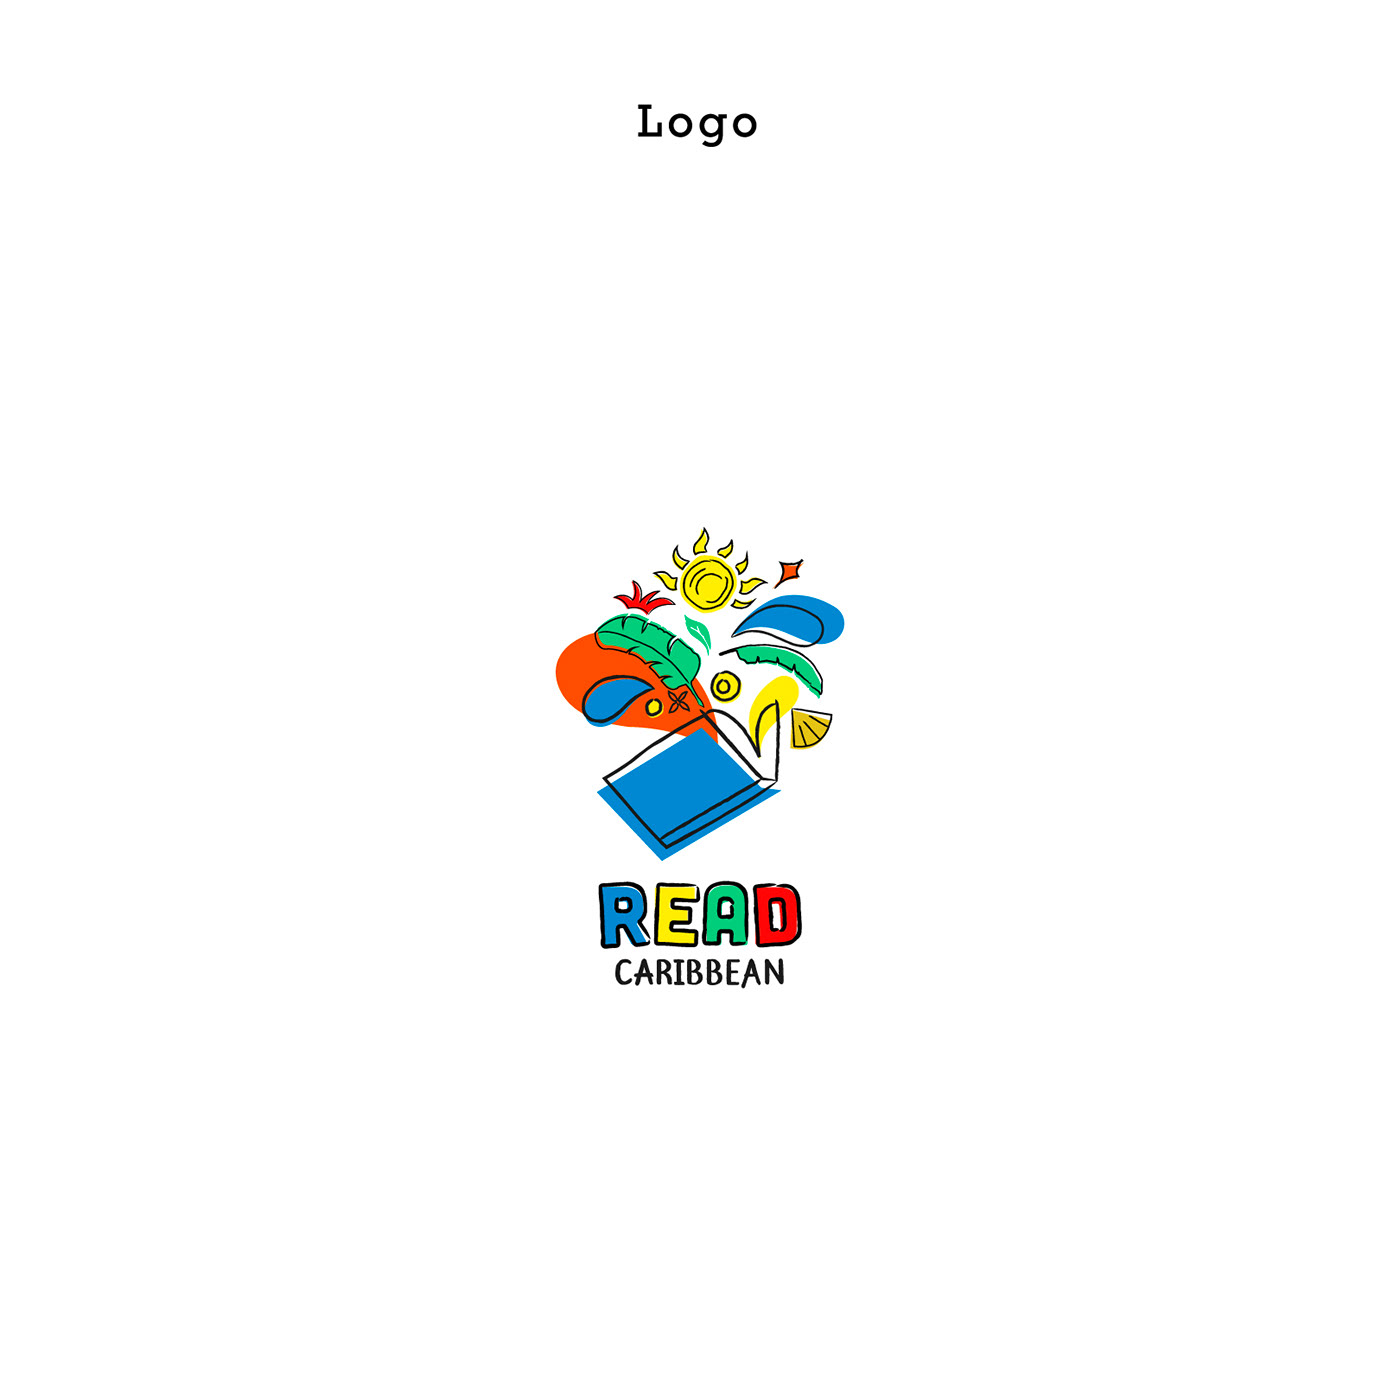 The logo for Read Caribbean